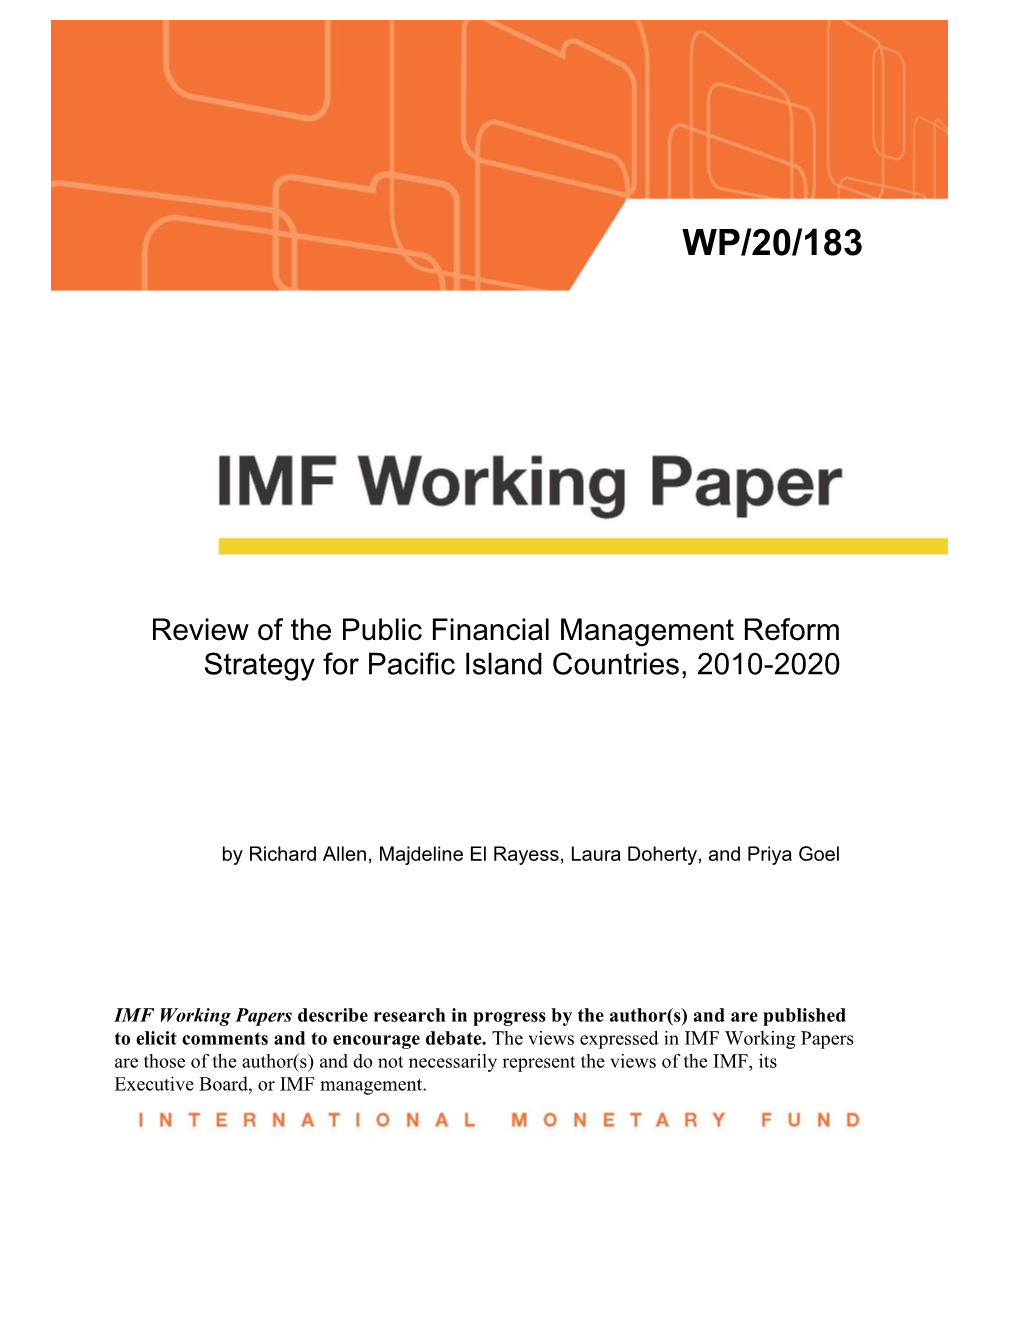 Review of Public Financial Management Reform